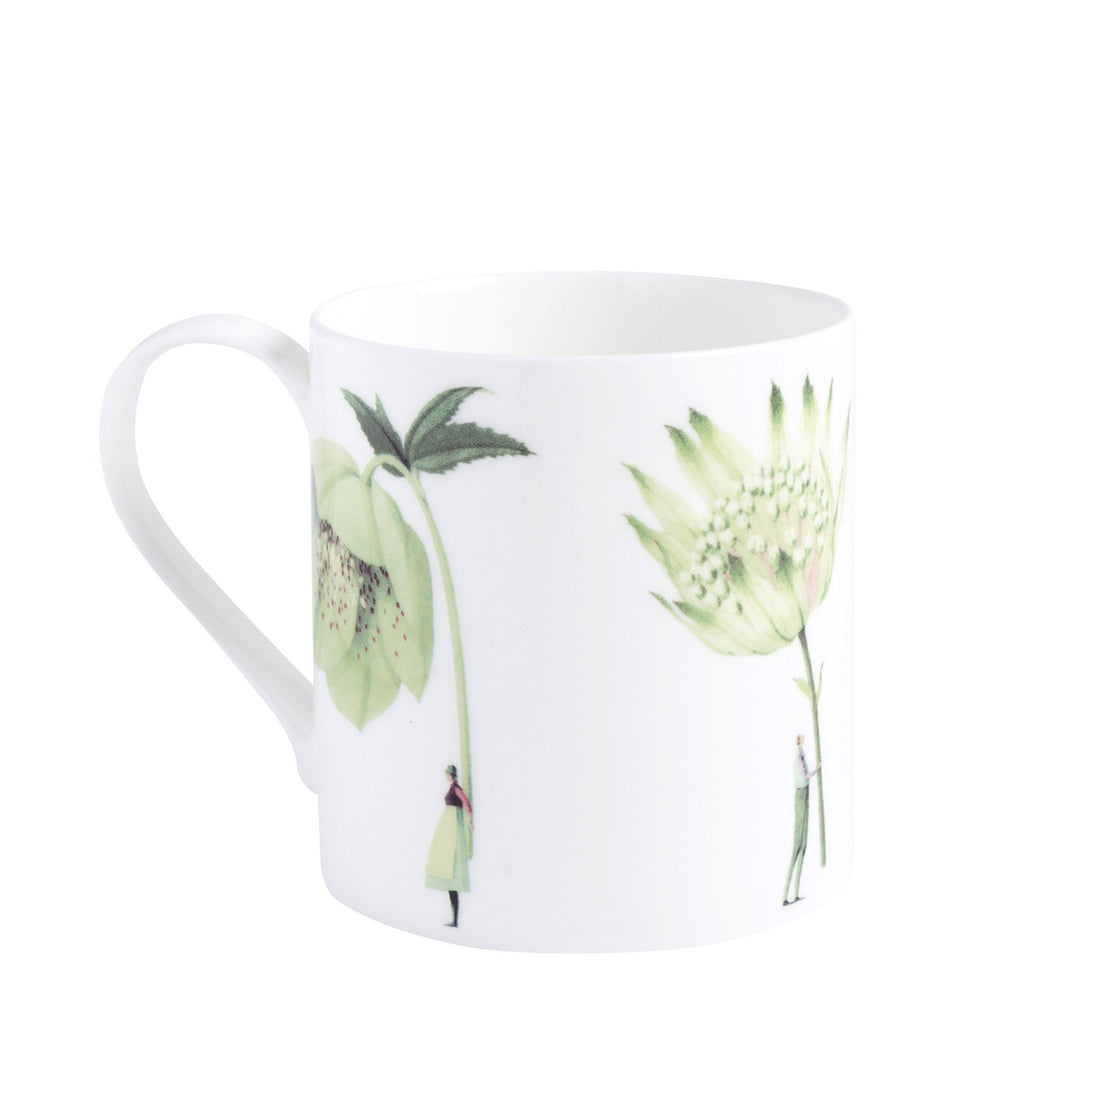 mug, bone china, green flowers, illustration, made in england